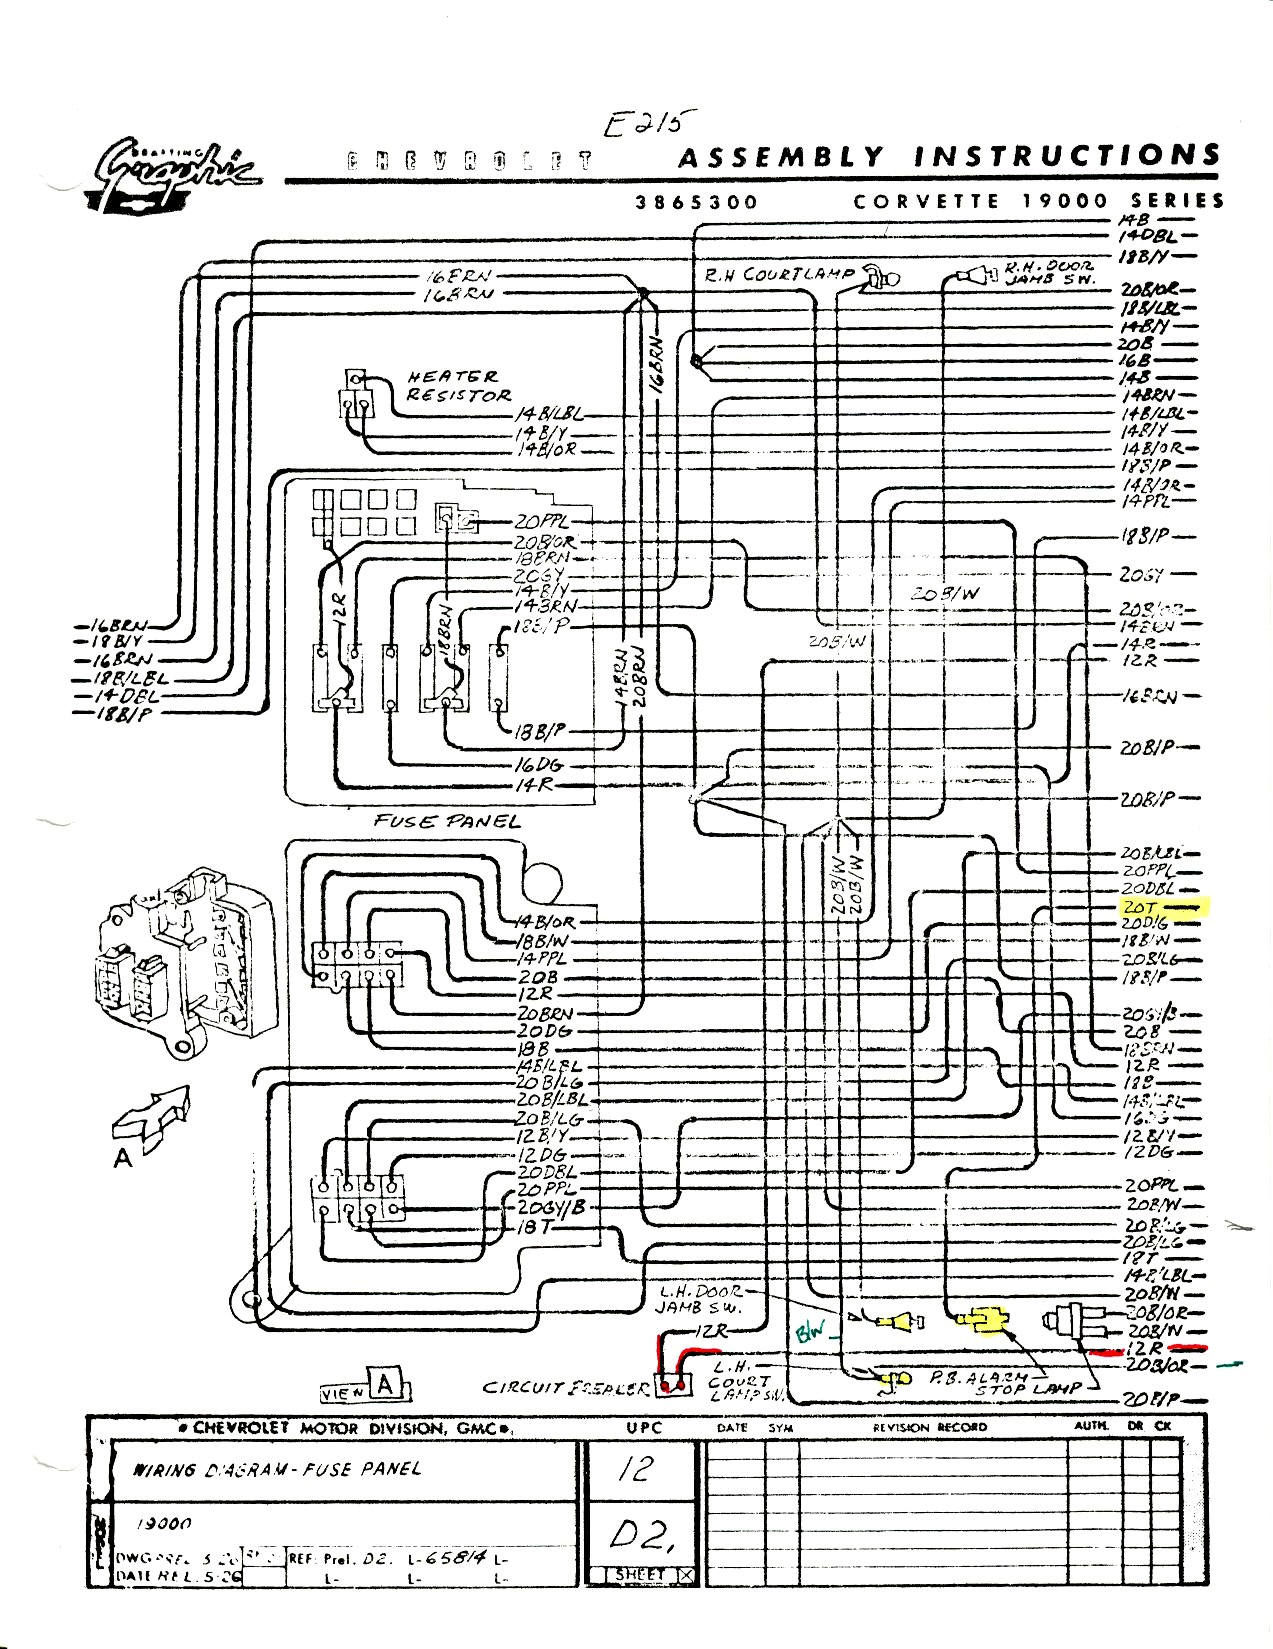 1973 Corvette Wiring Diagram Mine Dictate Wiring Diagram Library Mine Dictate Kivitour It